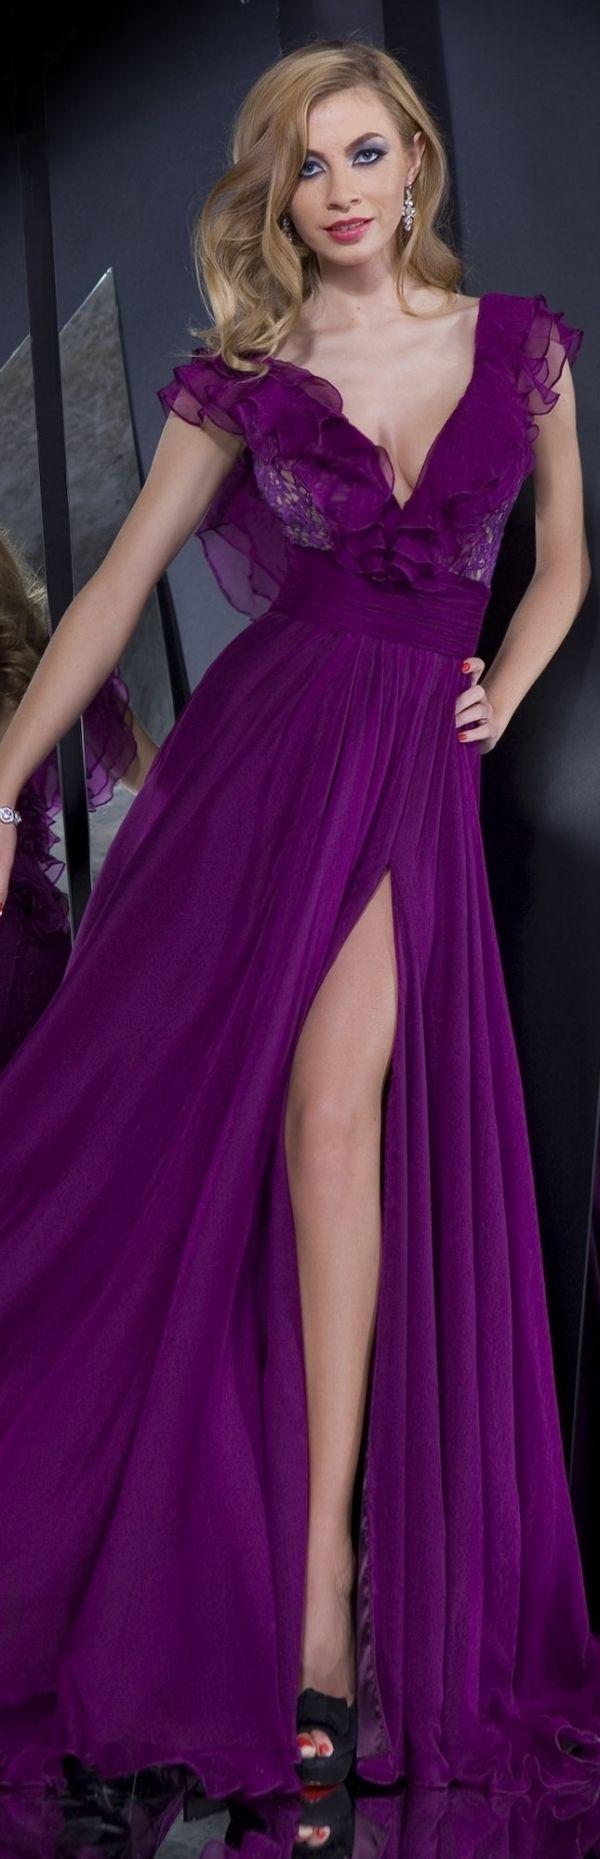 Wedding - Purple Dress for Bridesmaid